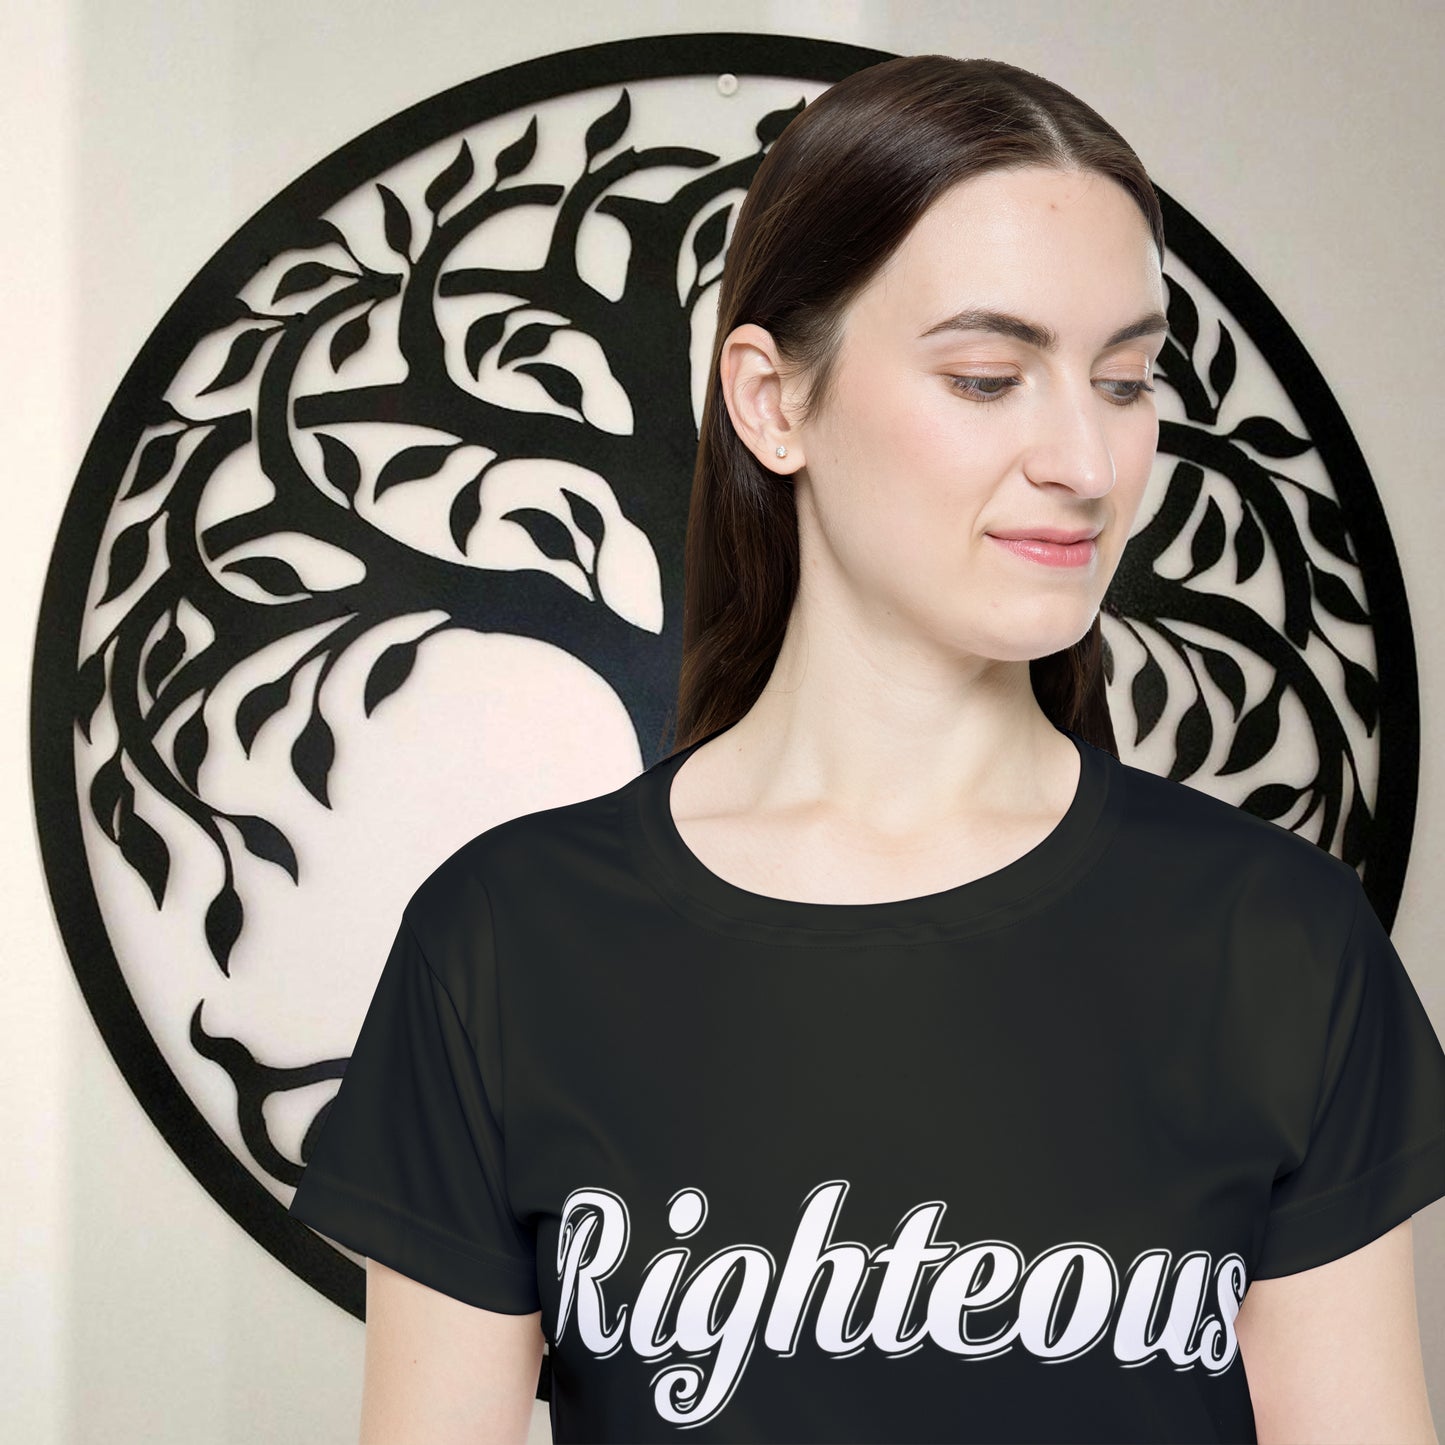 Righteous Meditation Women's Jersey - Find Your Zen (Black)